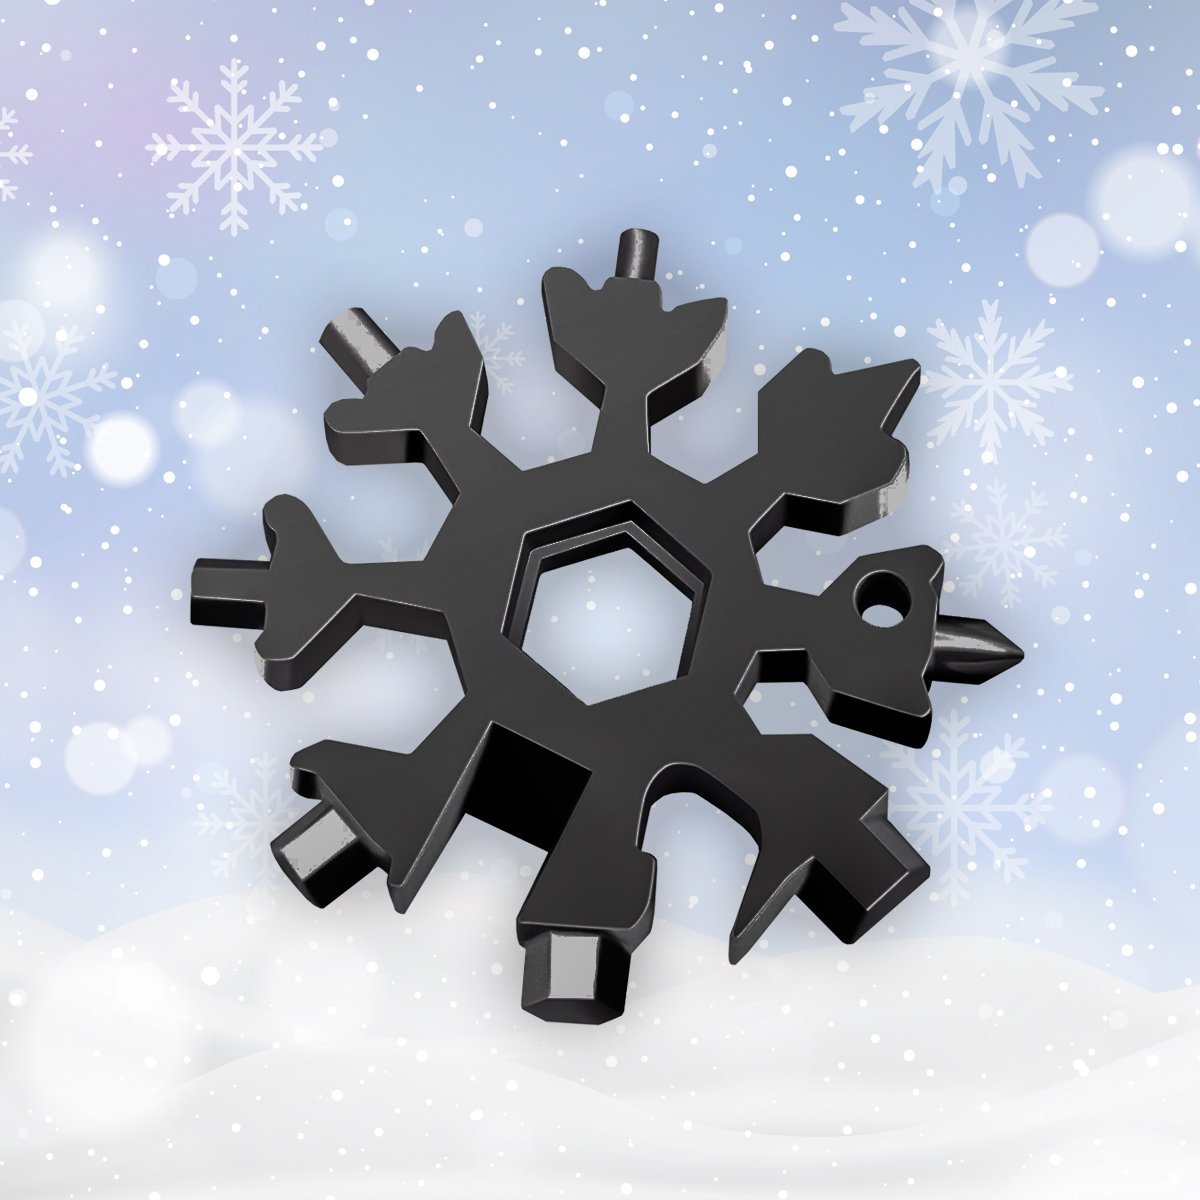 Saker 18-in-1 Snowflake Multi-Tool